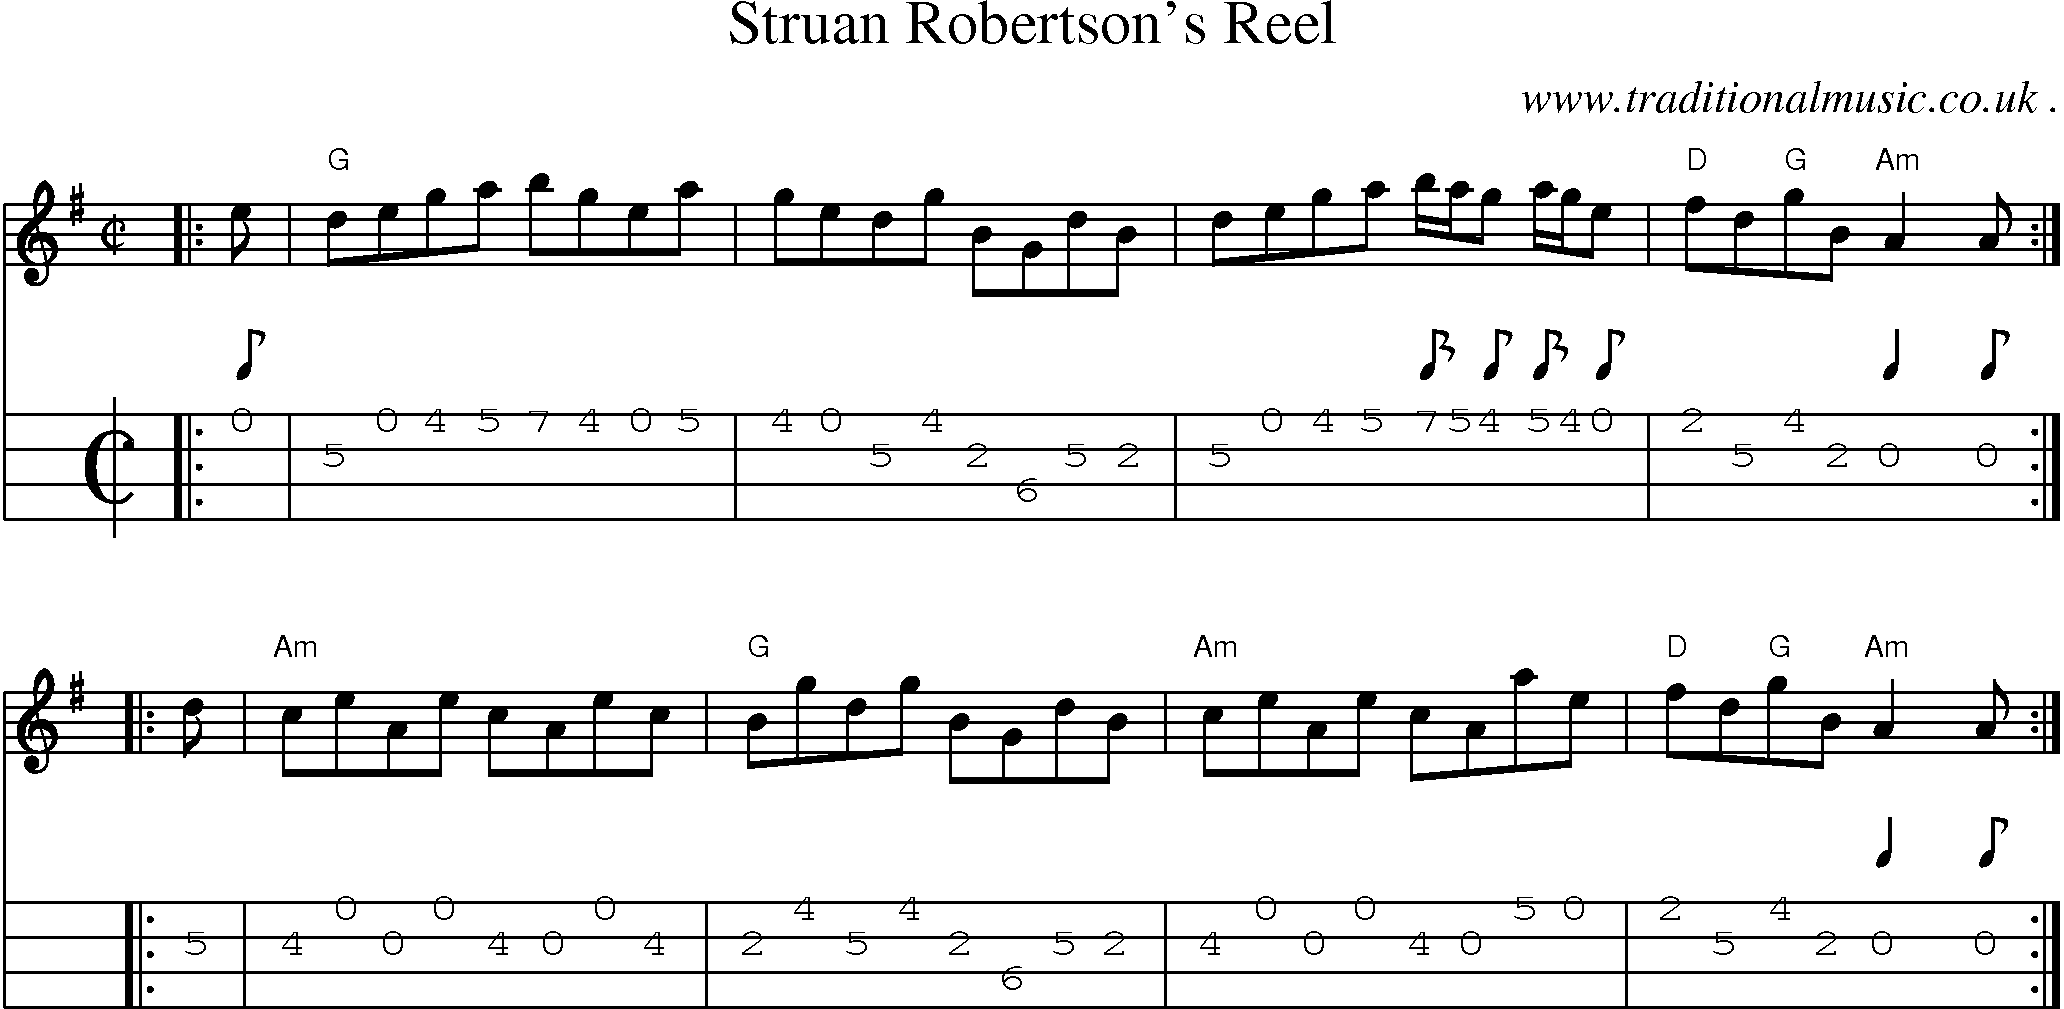 Sheet-music  score, Chords and Mandolin Tabs for Struan Robertsons Reel